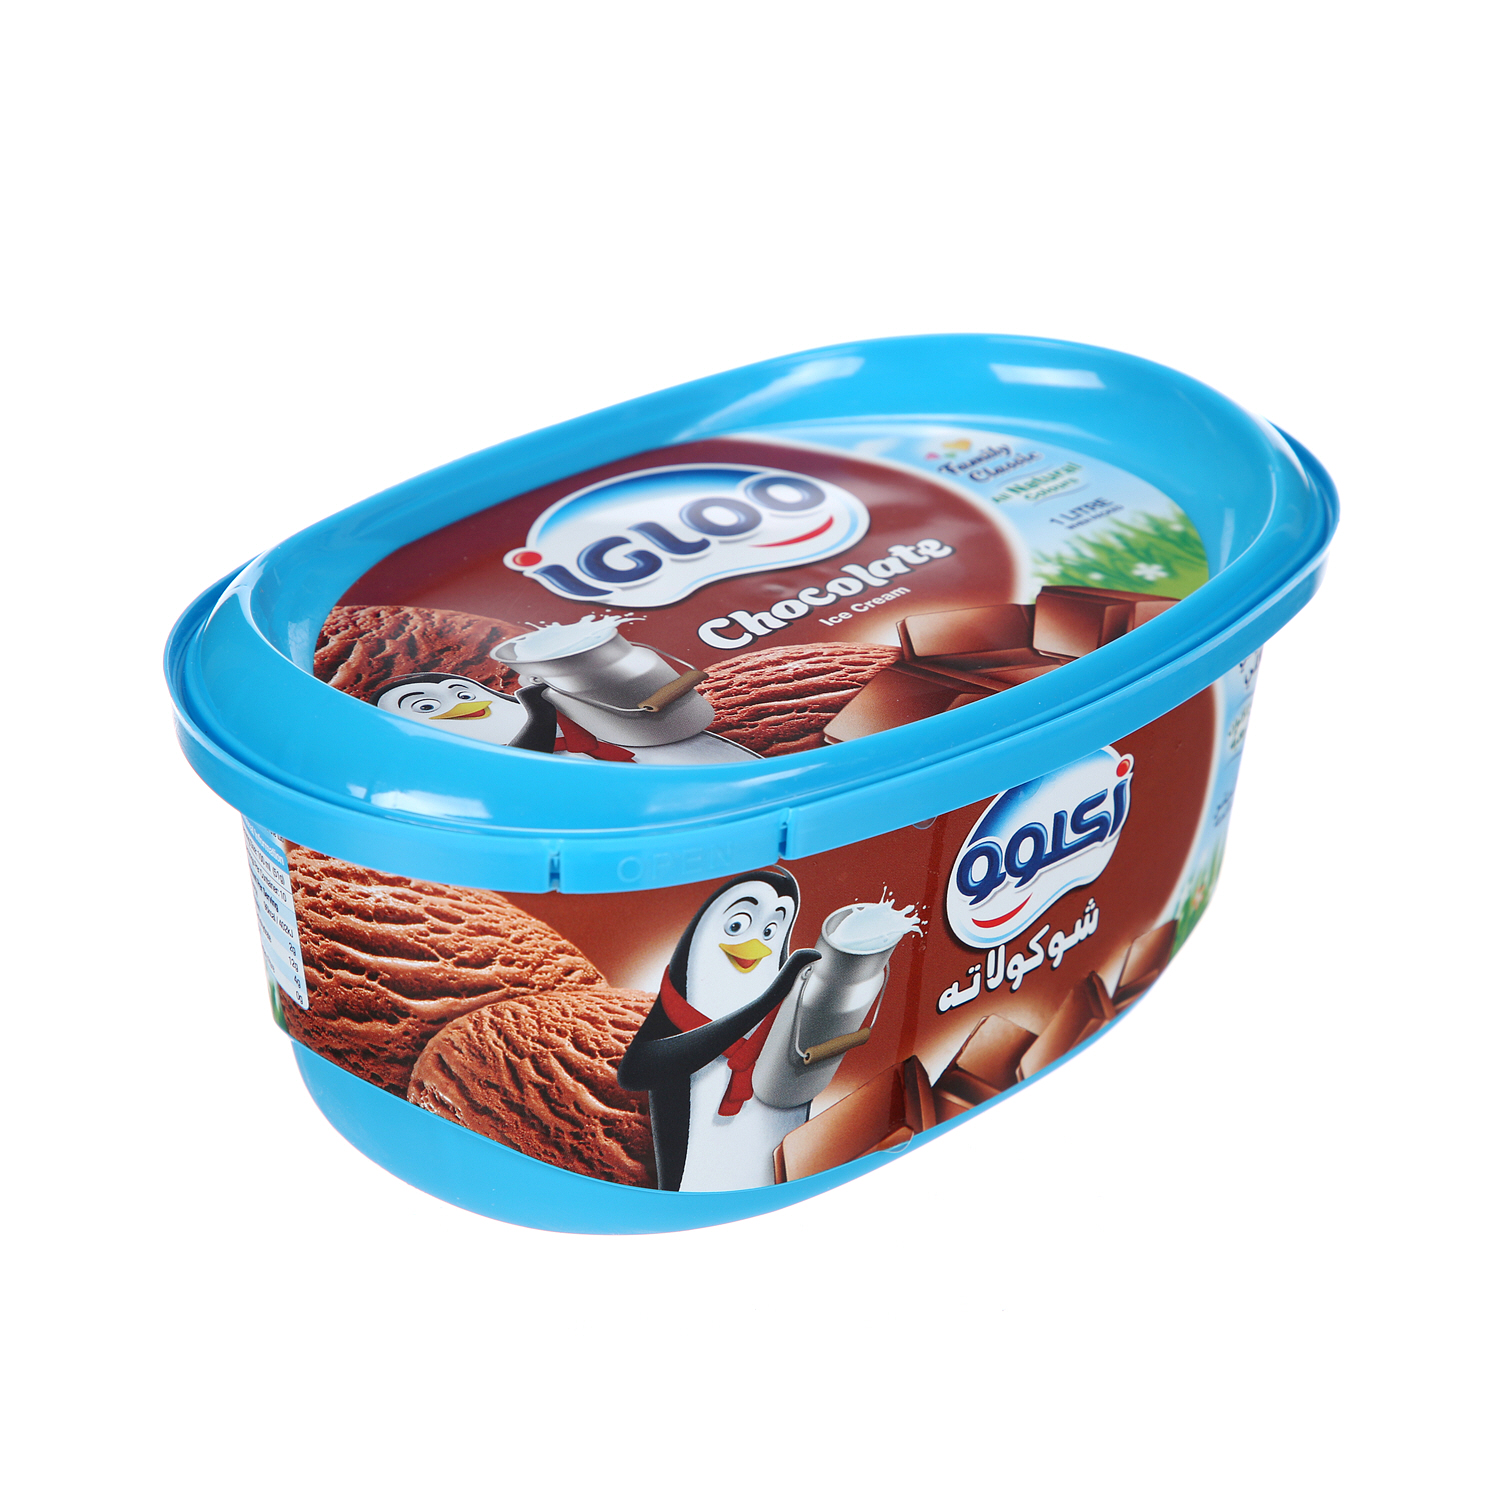 Igloo Chocolate 1 L